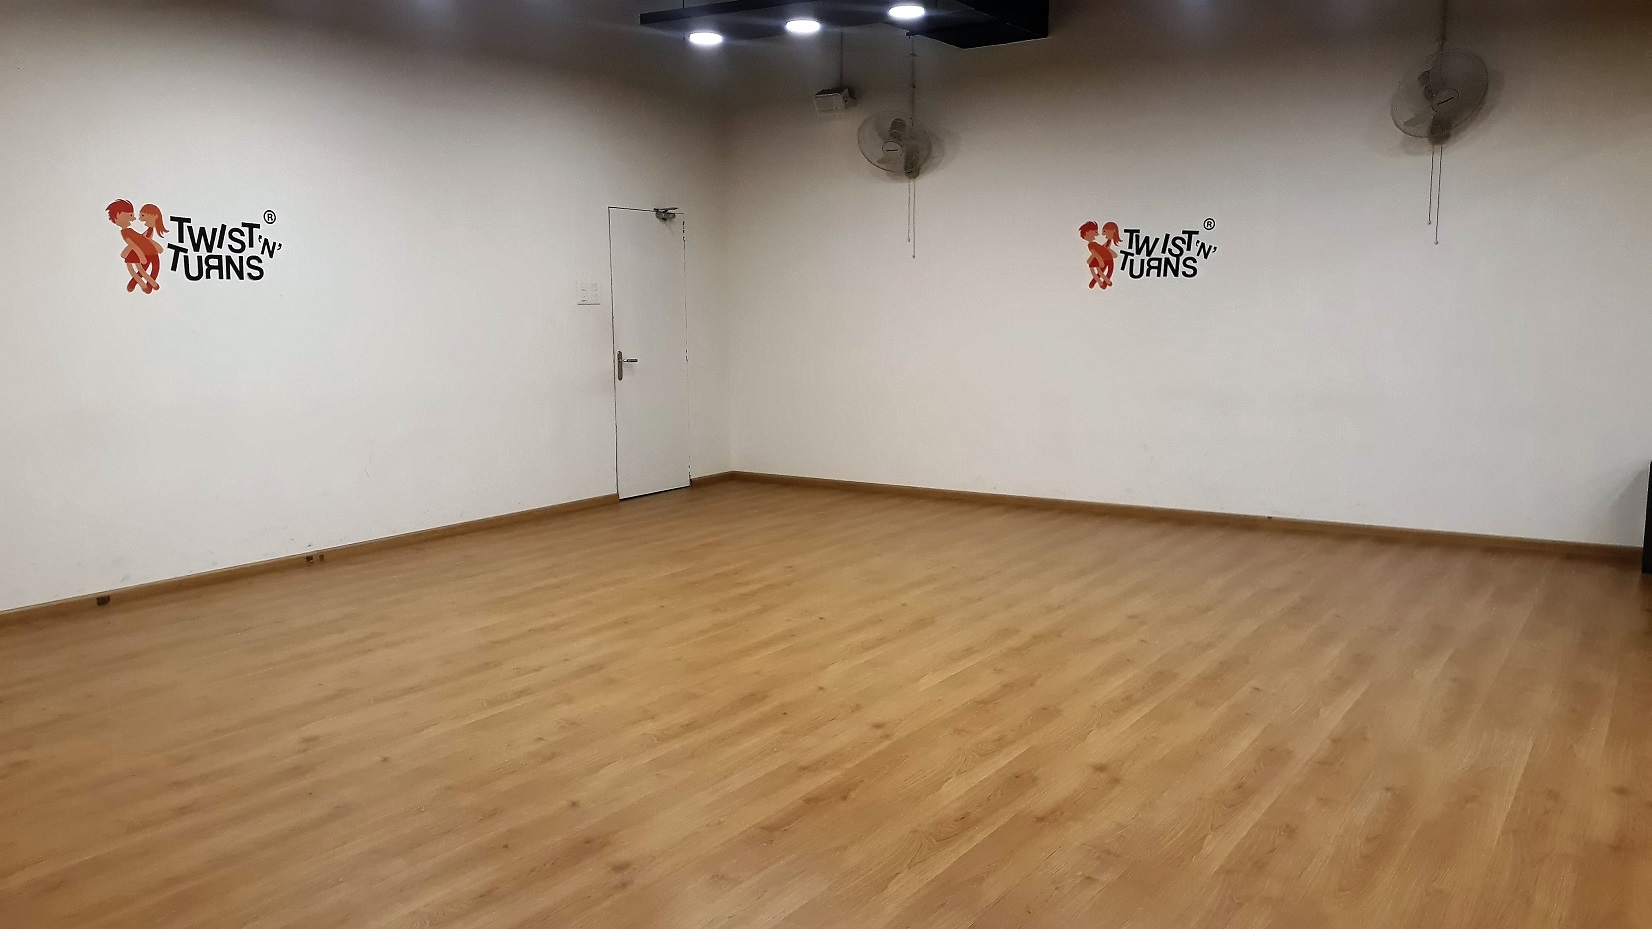 New Town Dance Studio Twist N Turns